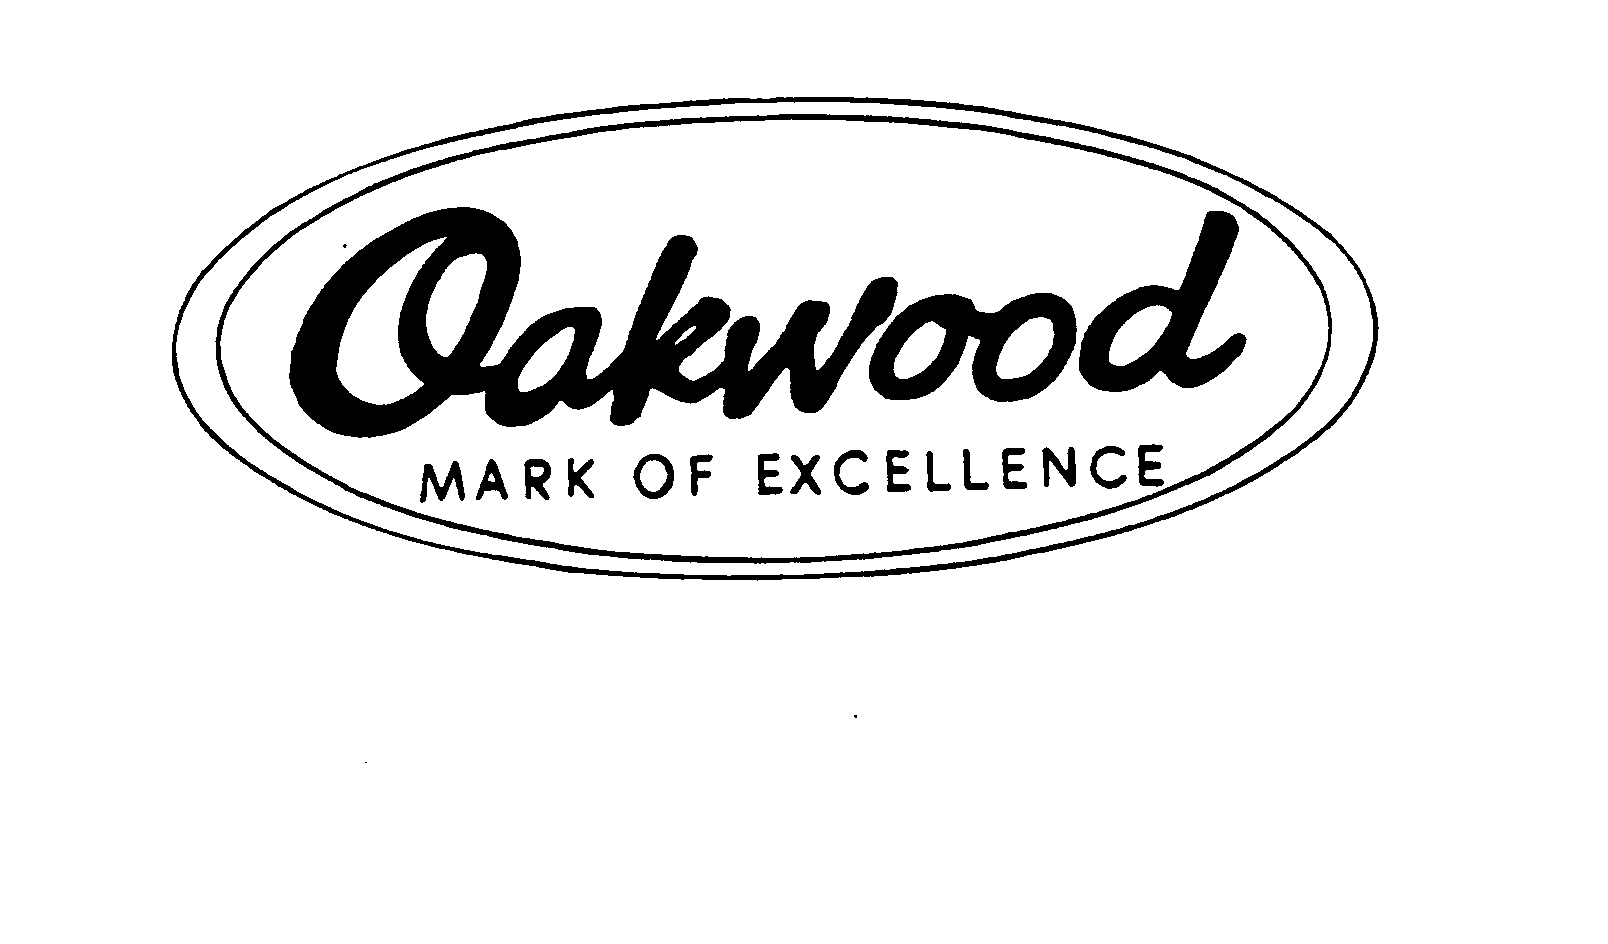  OAKWOOD MARK OF EXCELLENCE